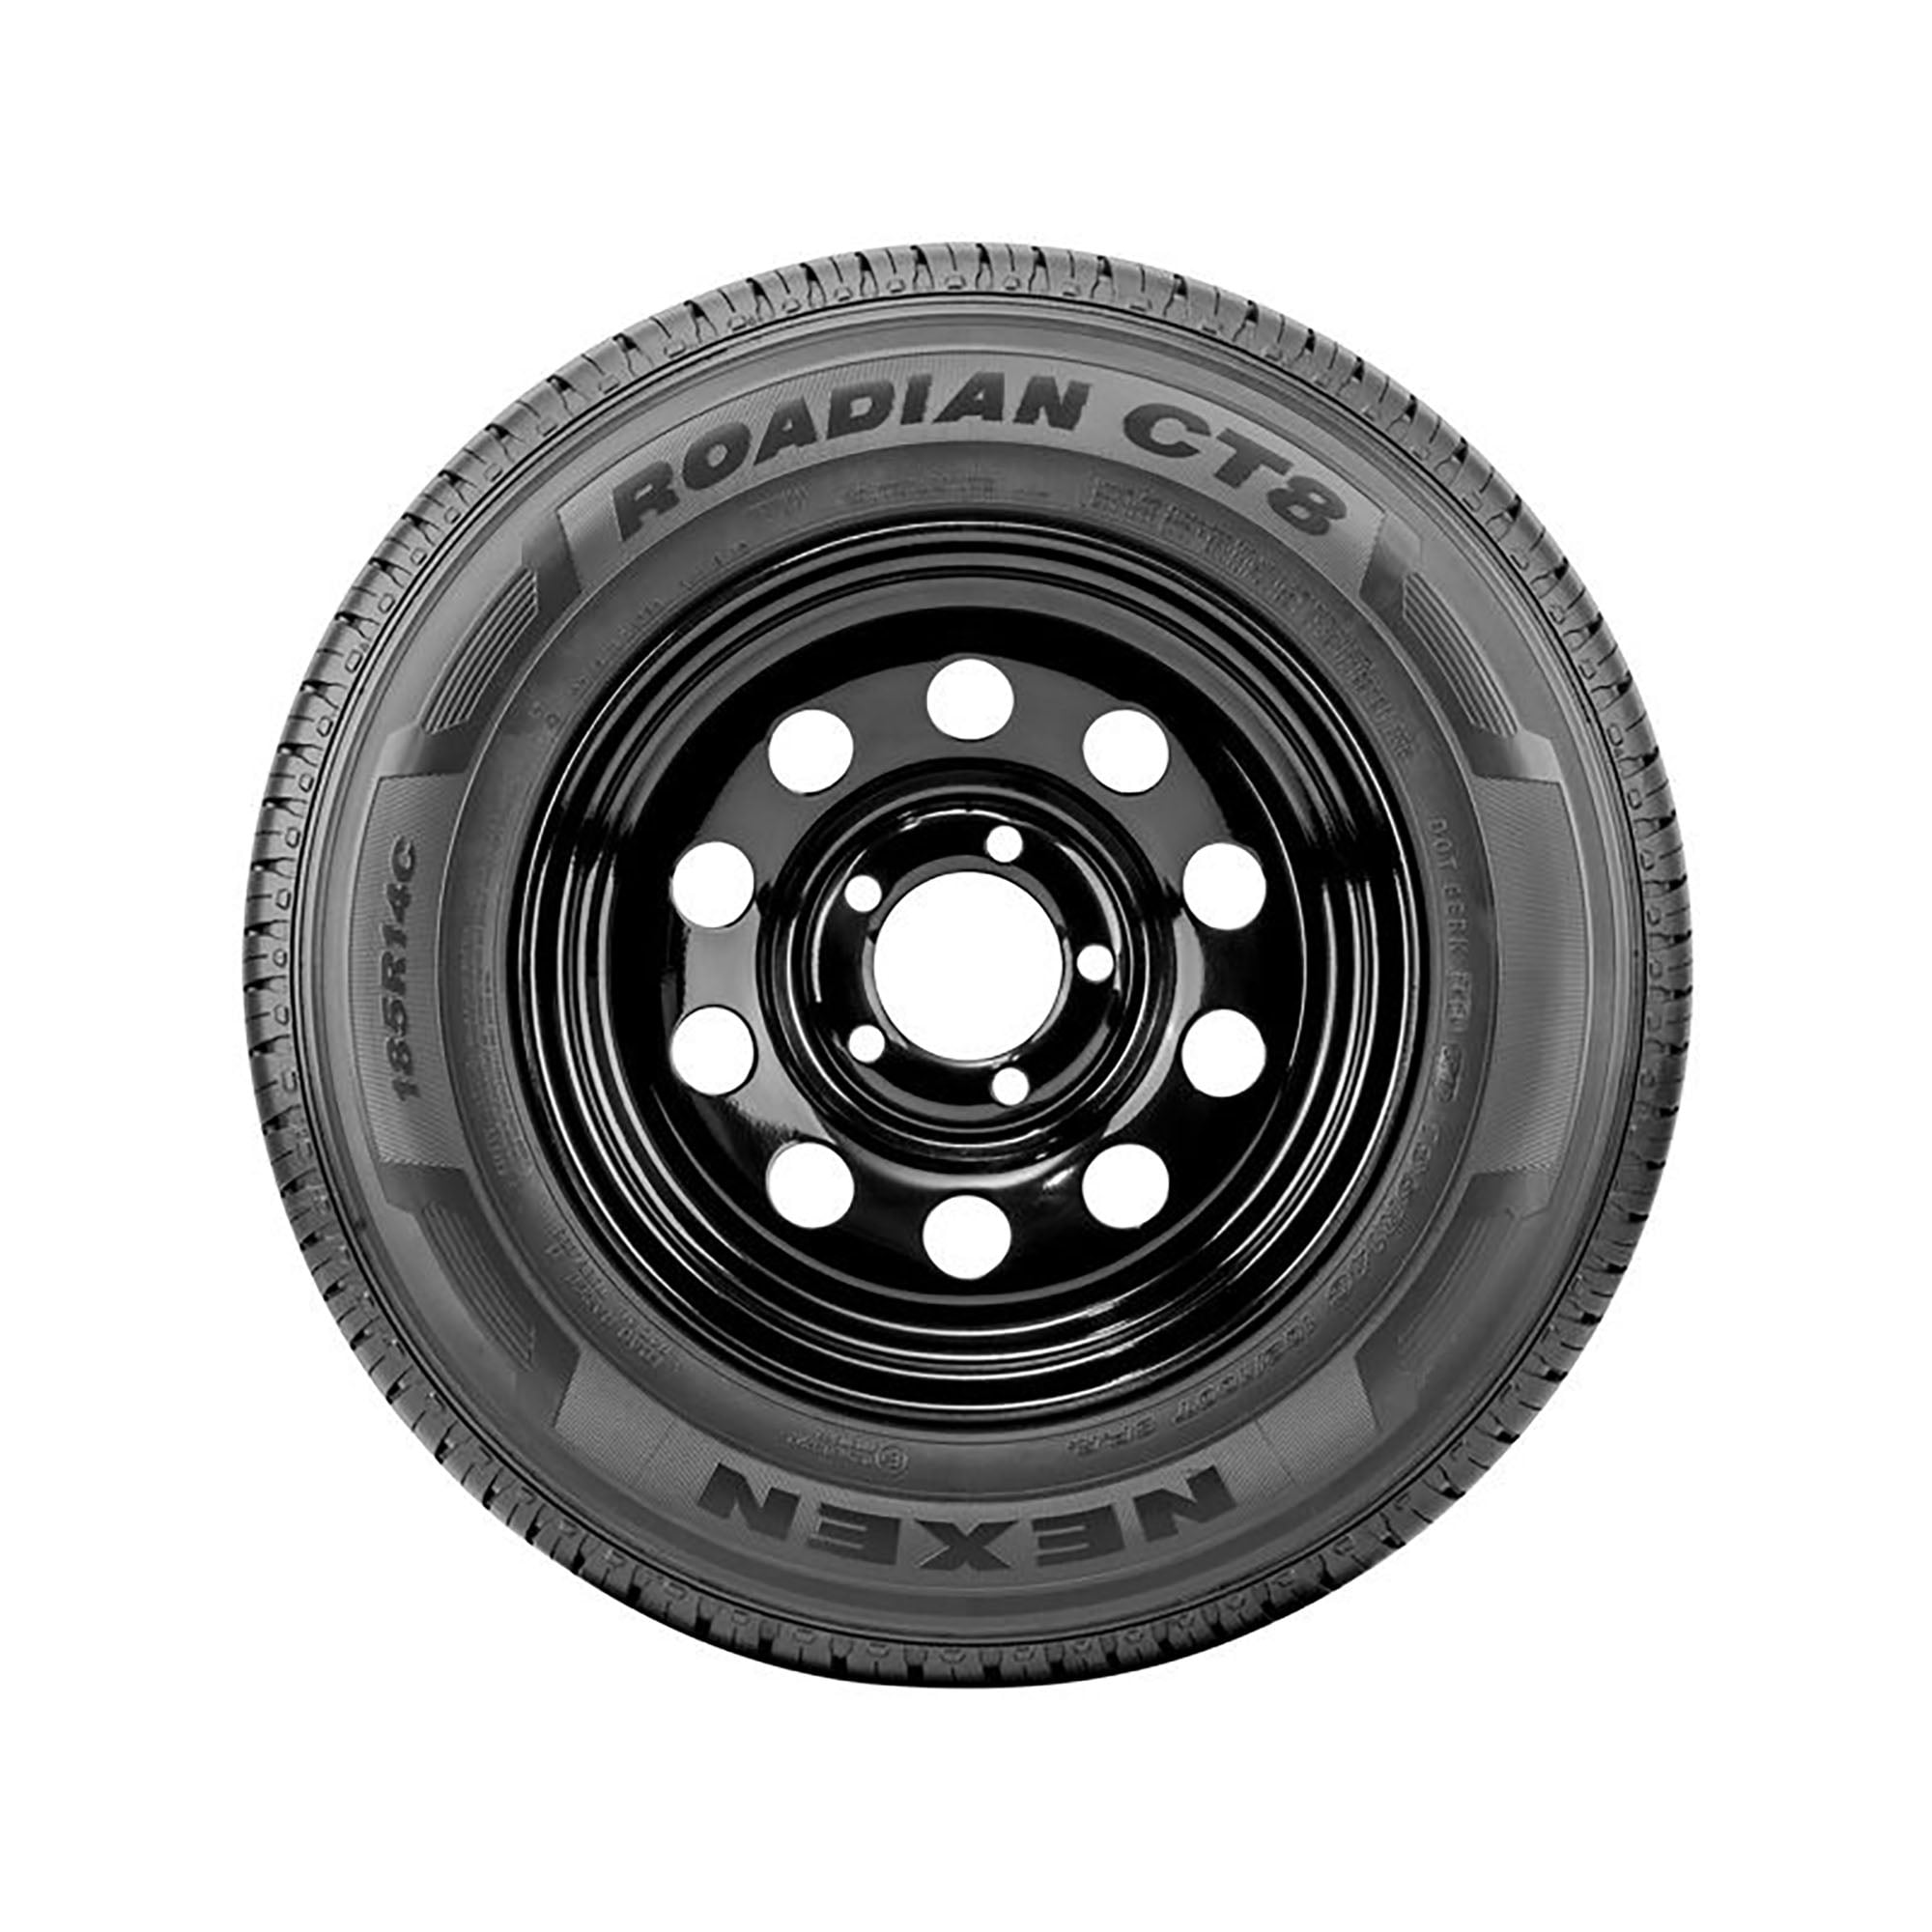 Nexen Roadian CT8 Highway 185R14C 102/100T D Light Truck Tire